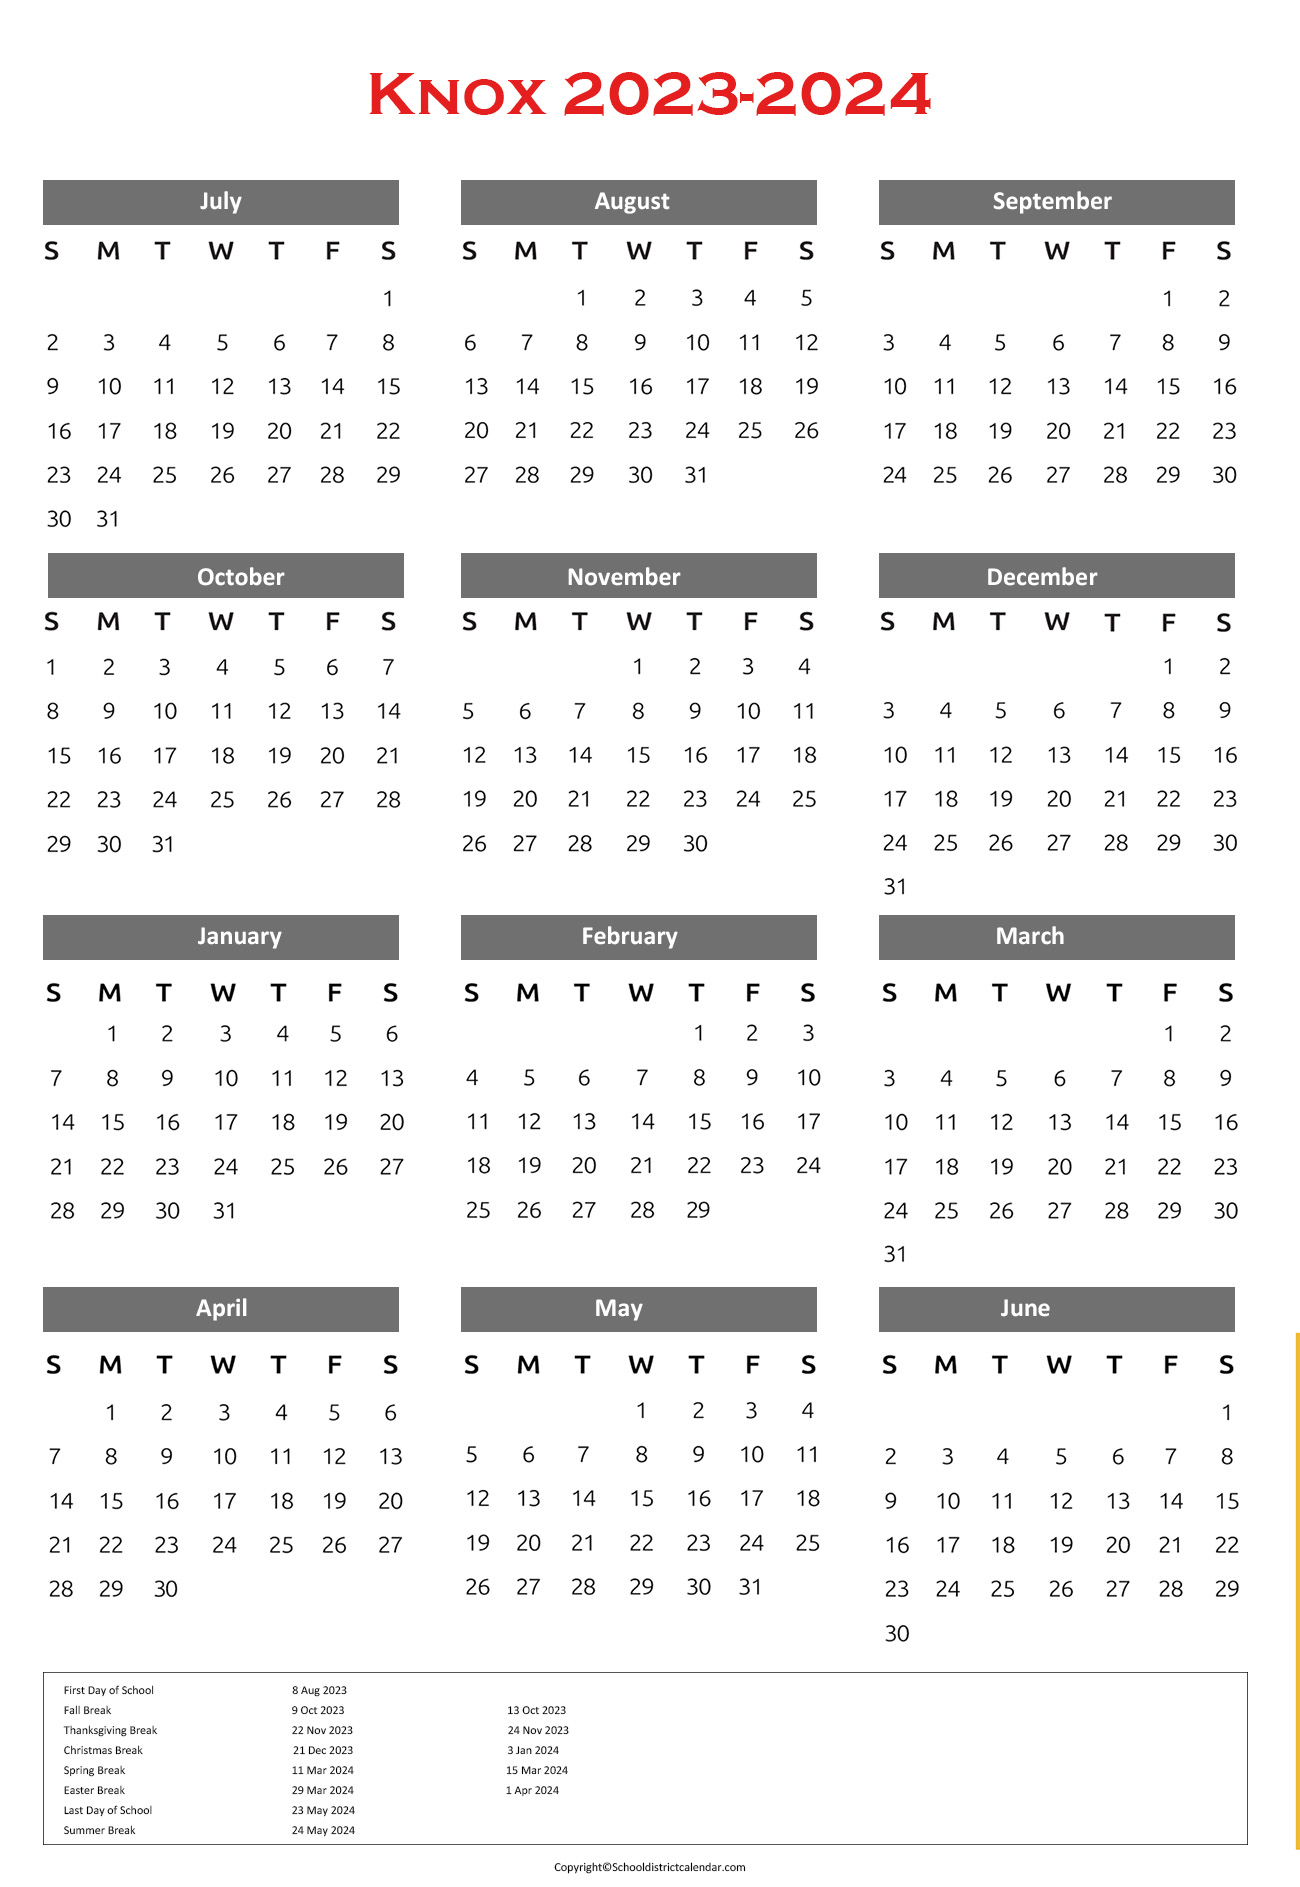 Knox County Schools Calendar Holidays 2023-2024